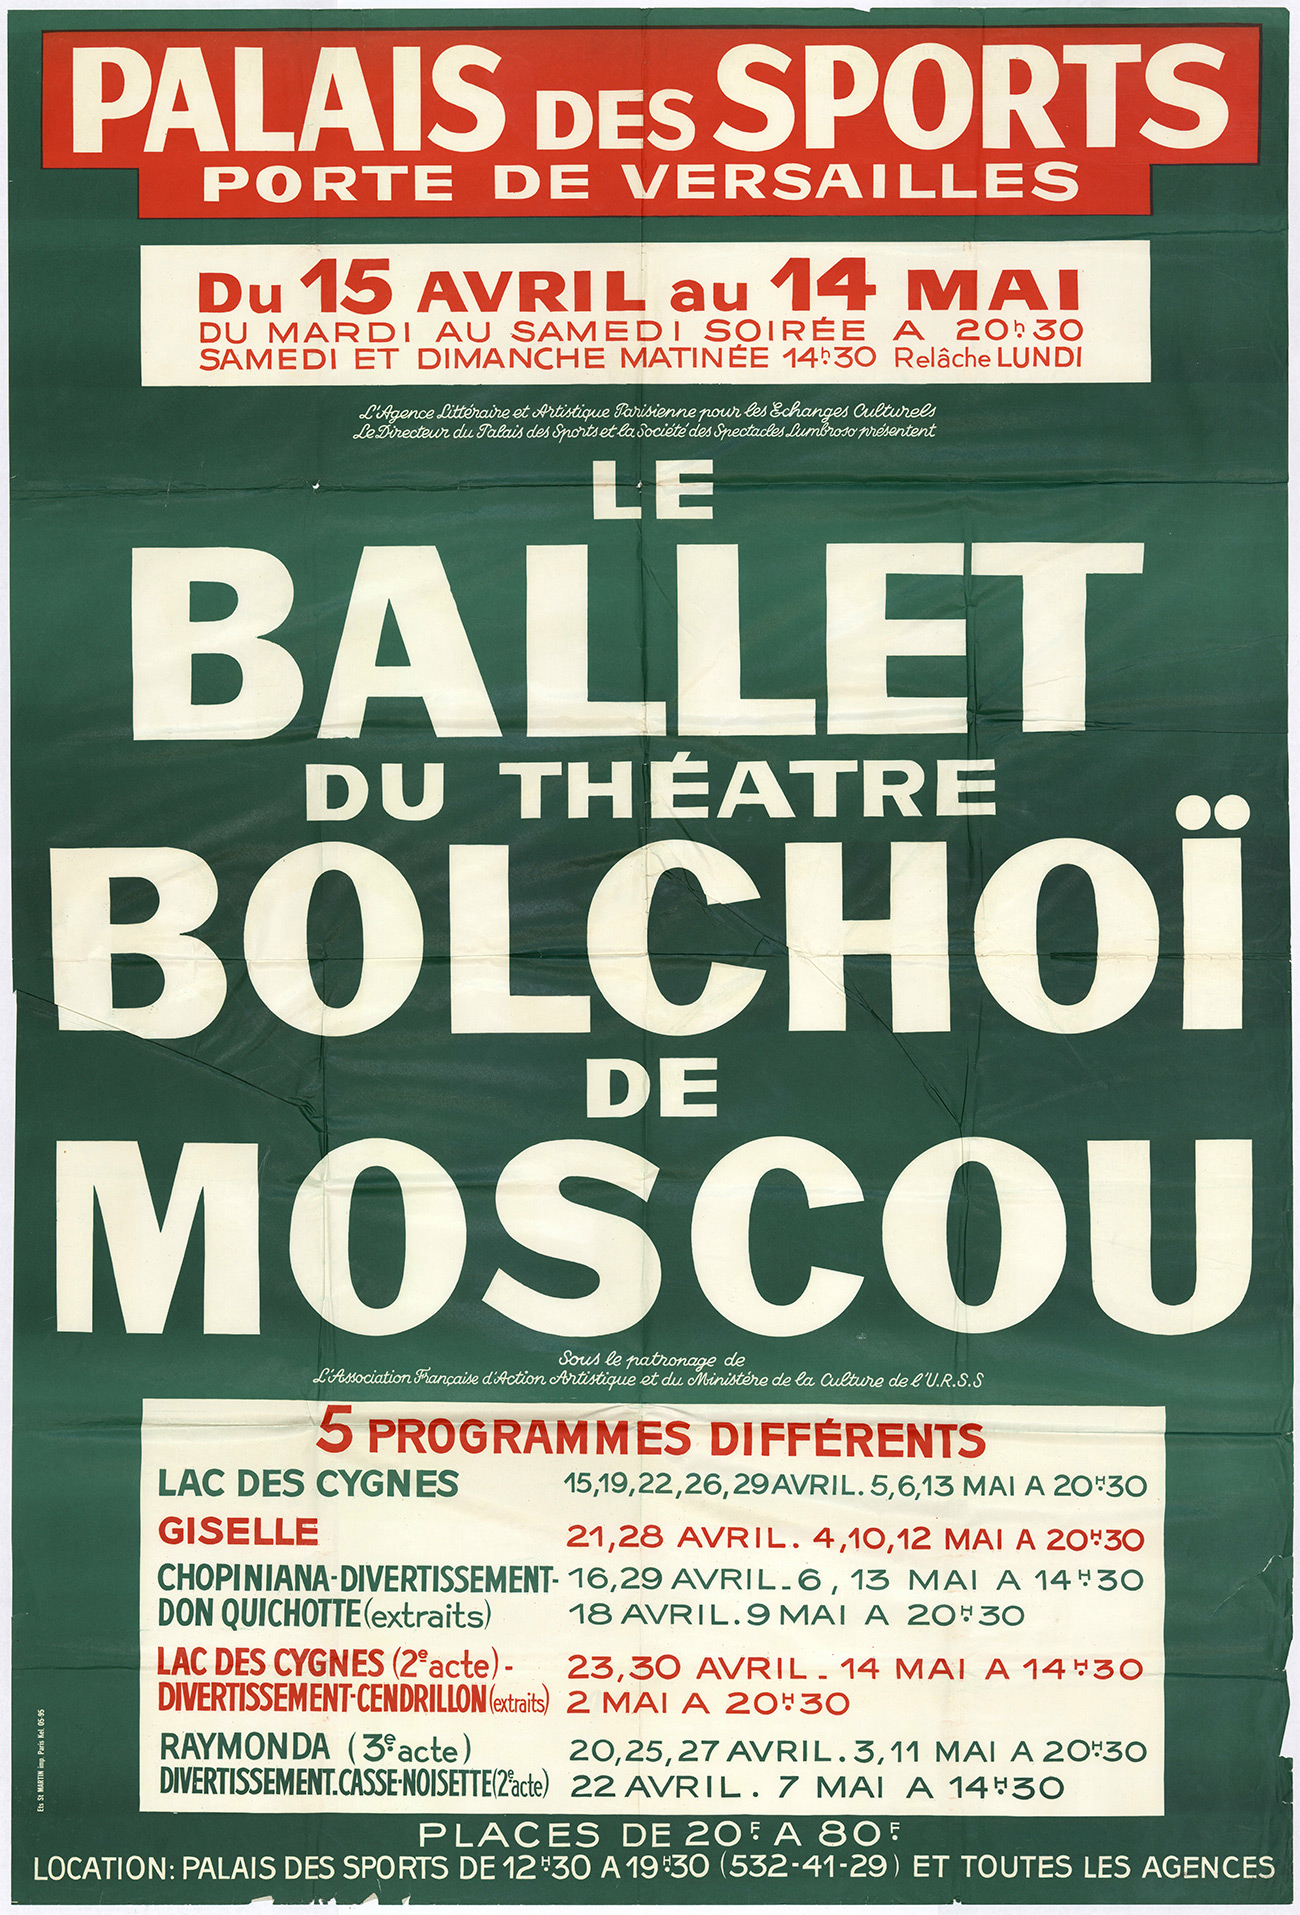 Fuente: Teatro Bolshói, ABBYY